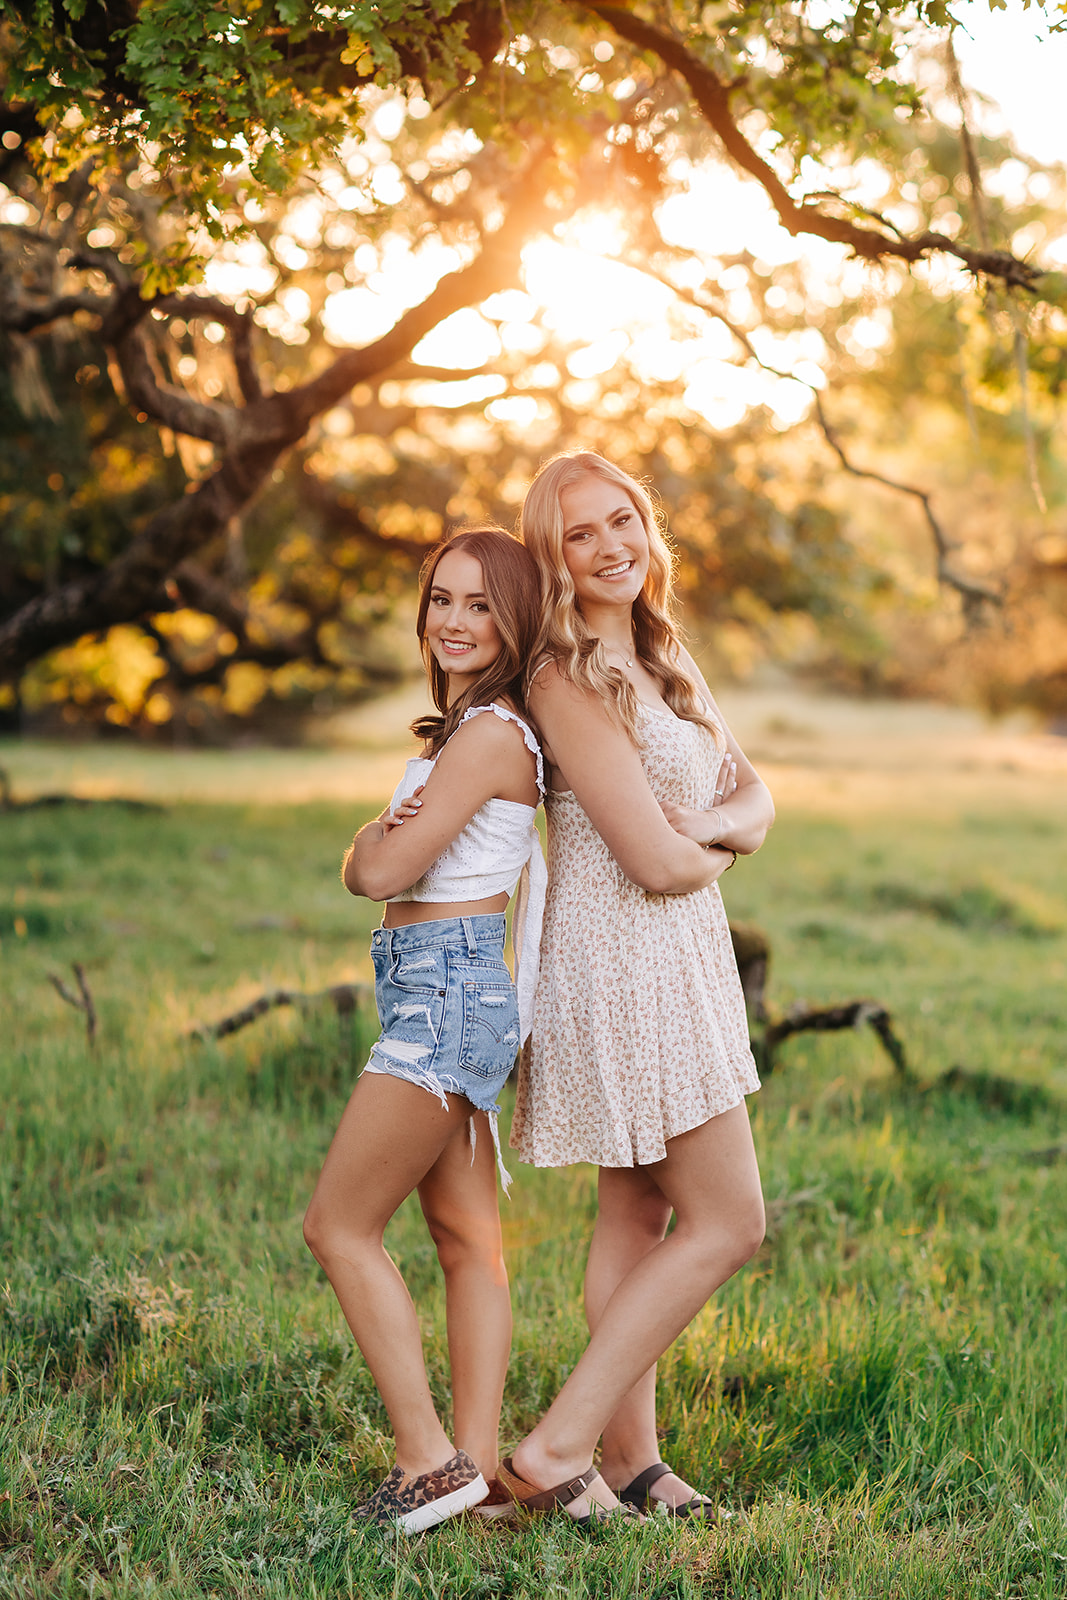 Katherine & Jordan | Best Friend Senior Pictures Ideas in Sonoma County